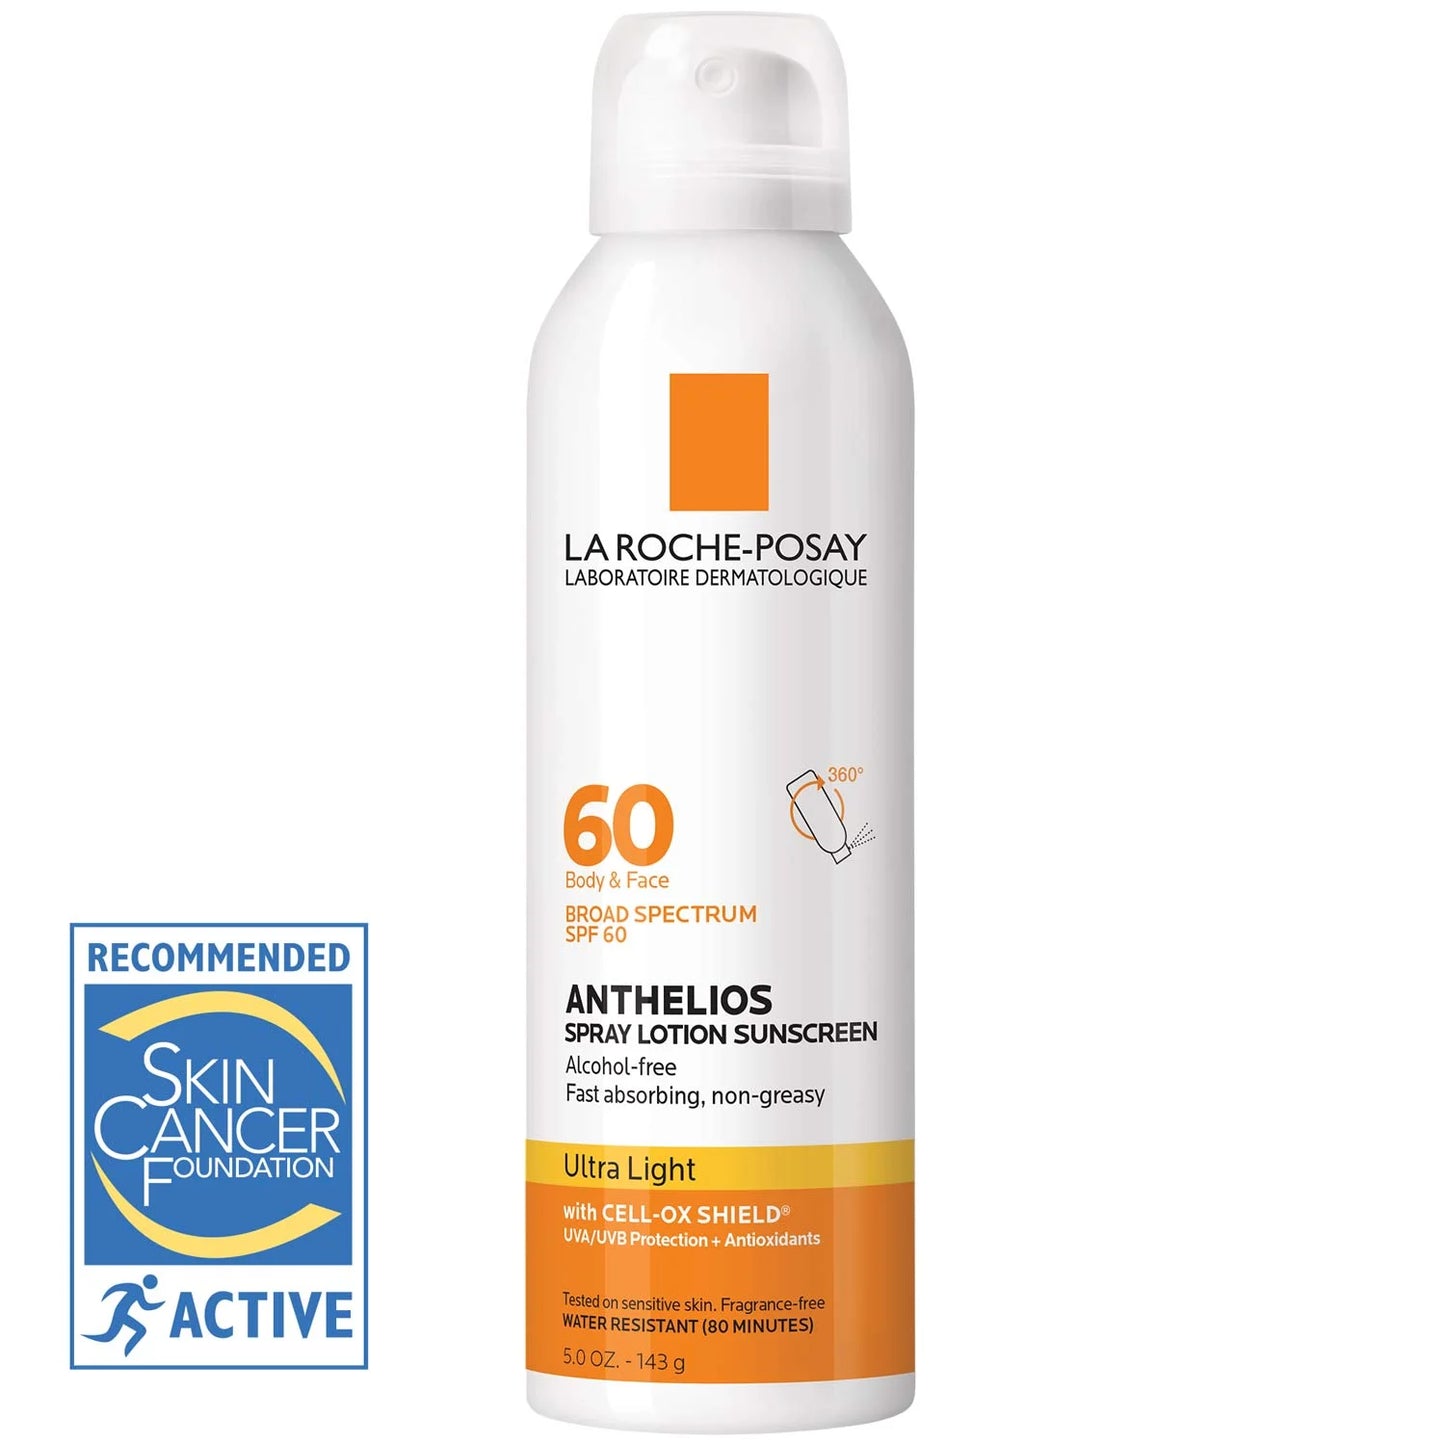 La Roche Posay Spray Lotion Sunscreen SPF60 Ultra Light